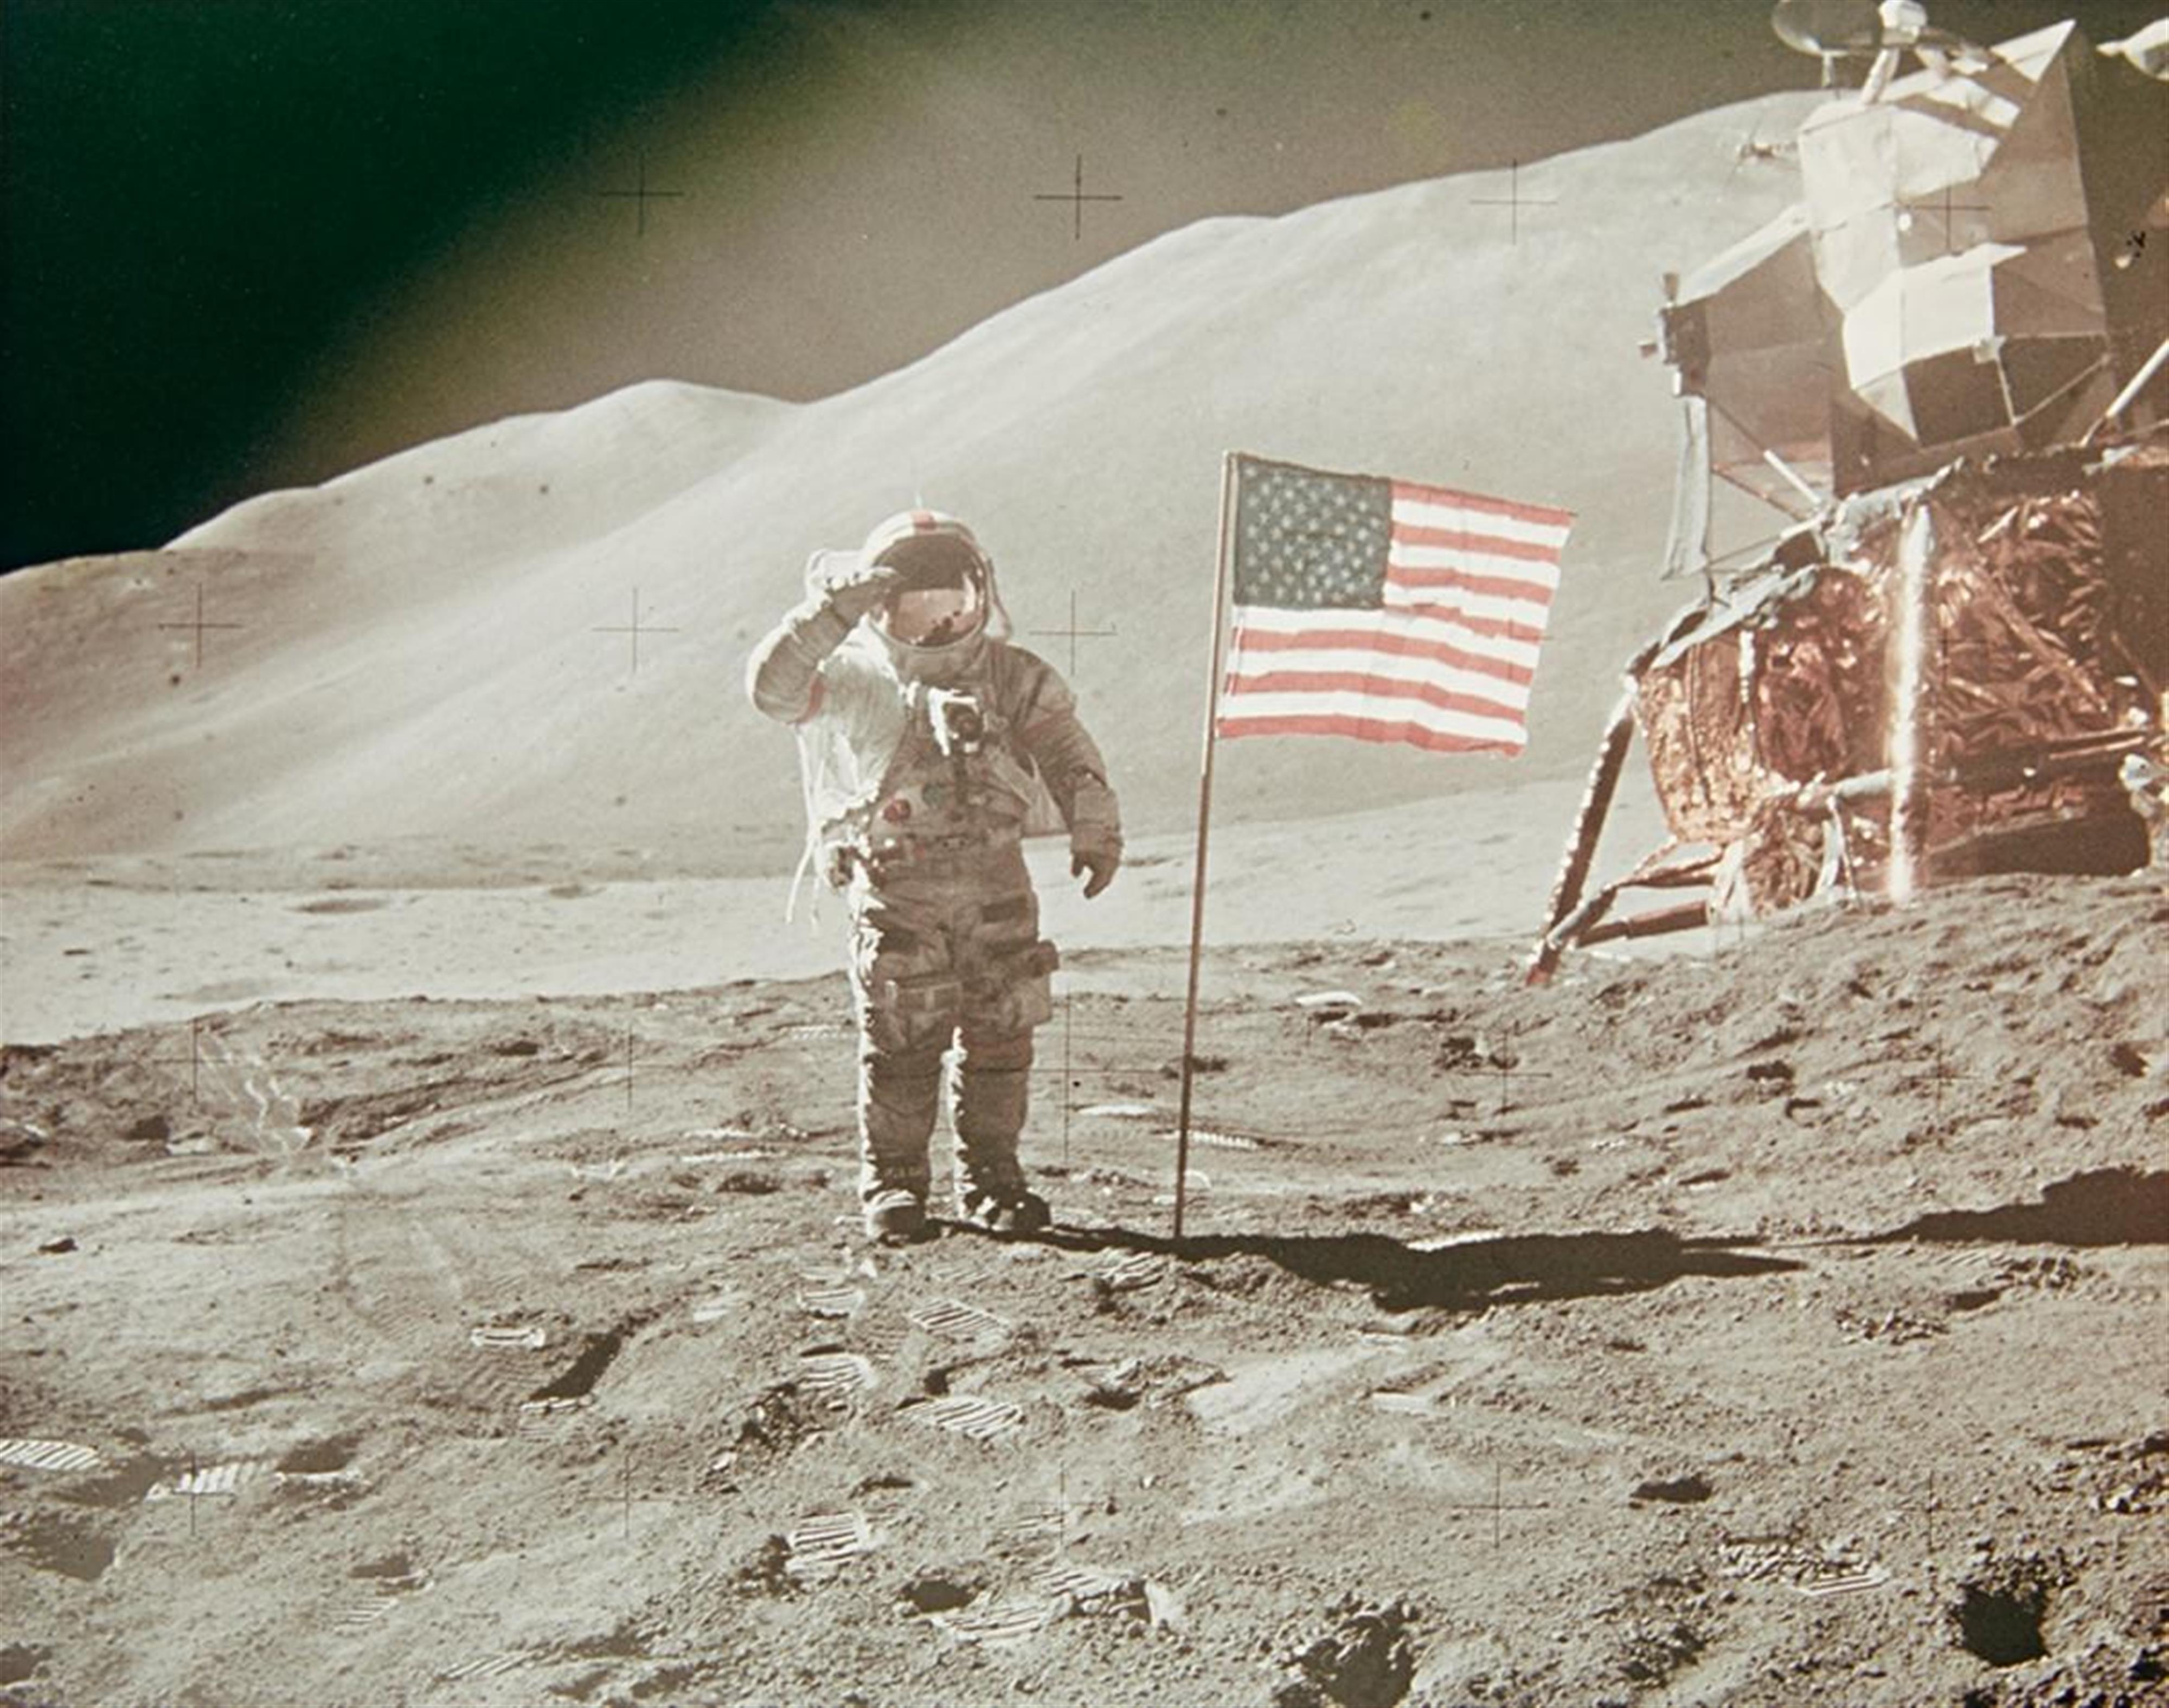 NASA - Astronaut David R. Scott saluting beside U.S. flag, Apllo 15 - image-1